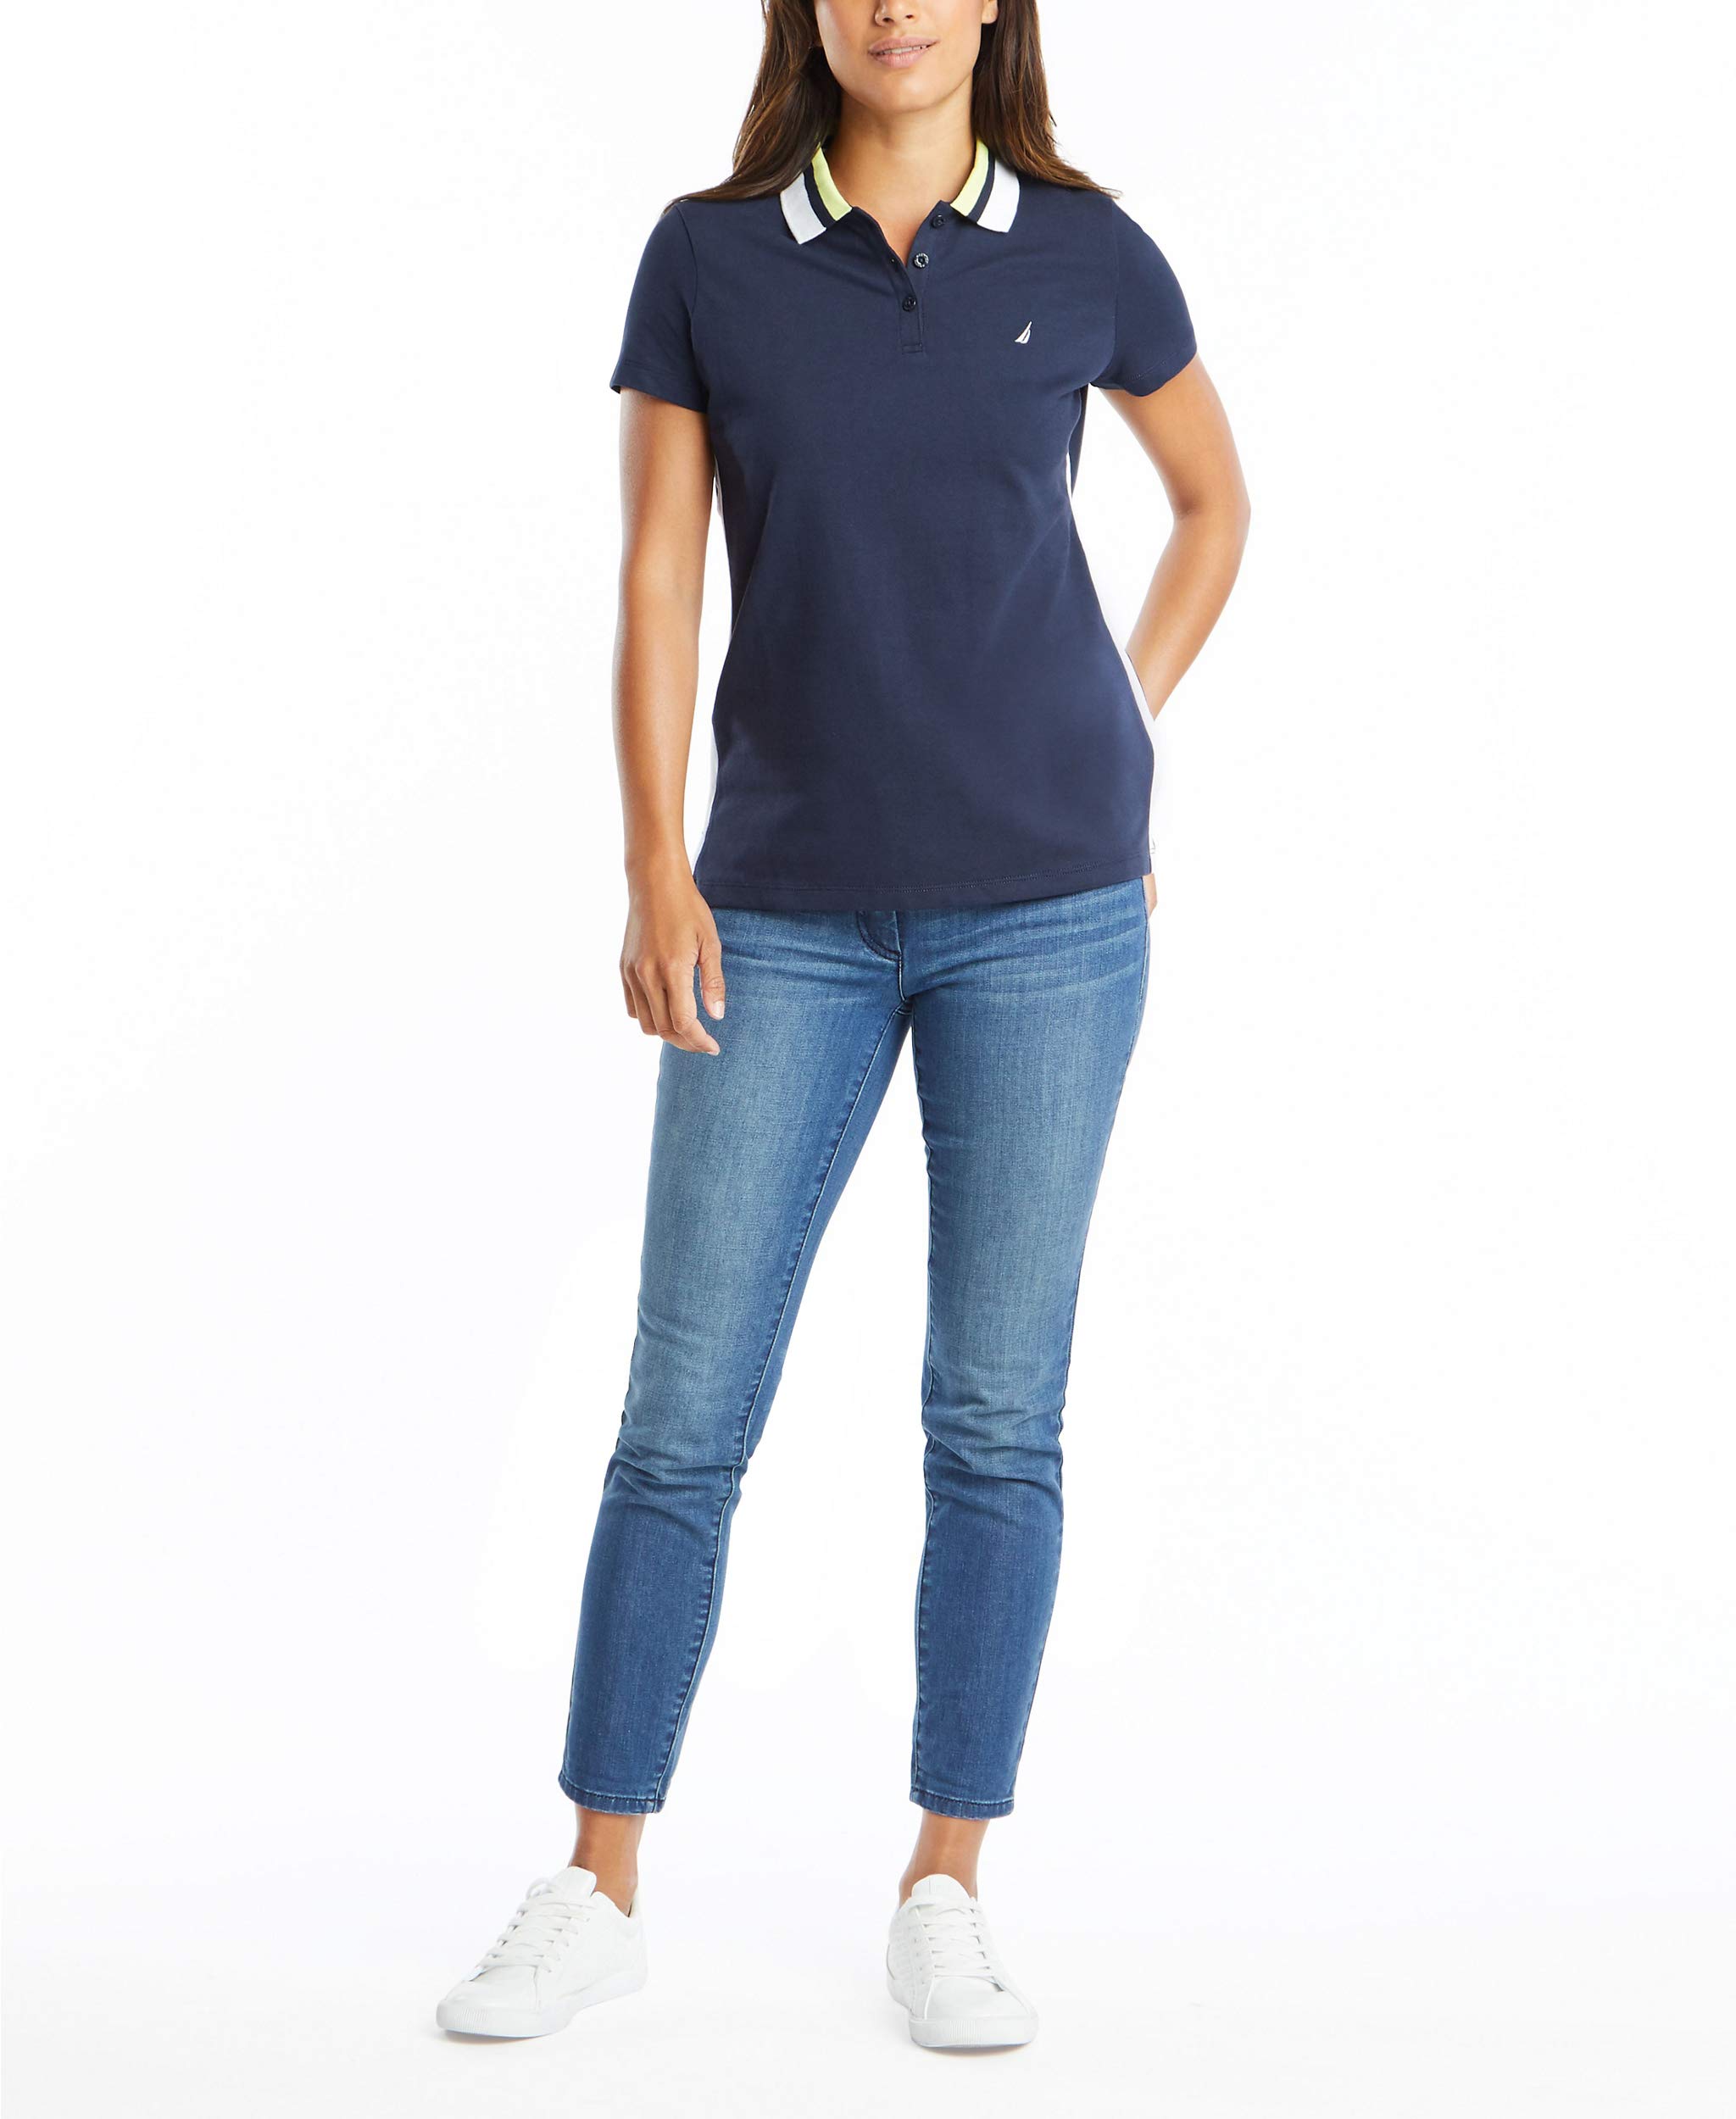 Nautica Women's Stretch Cotton Polo Shirt